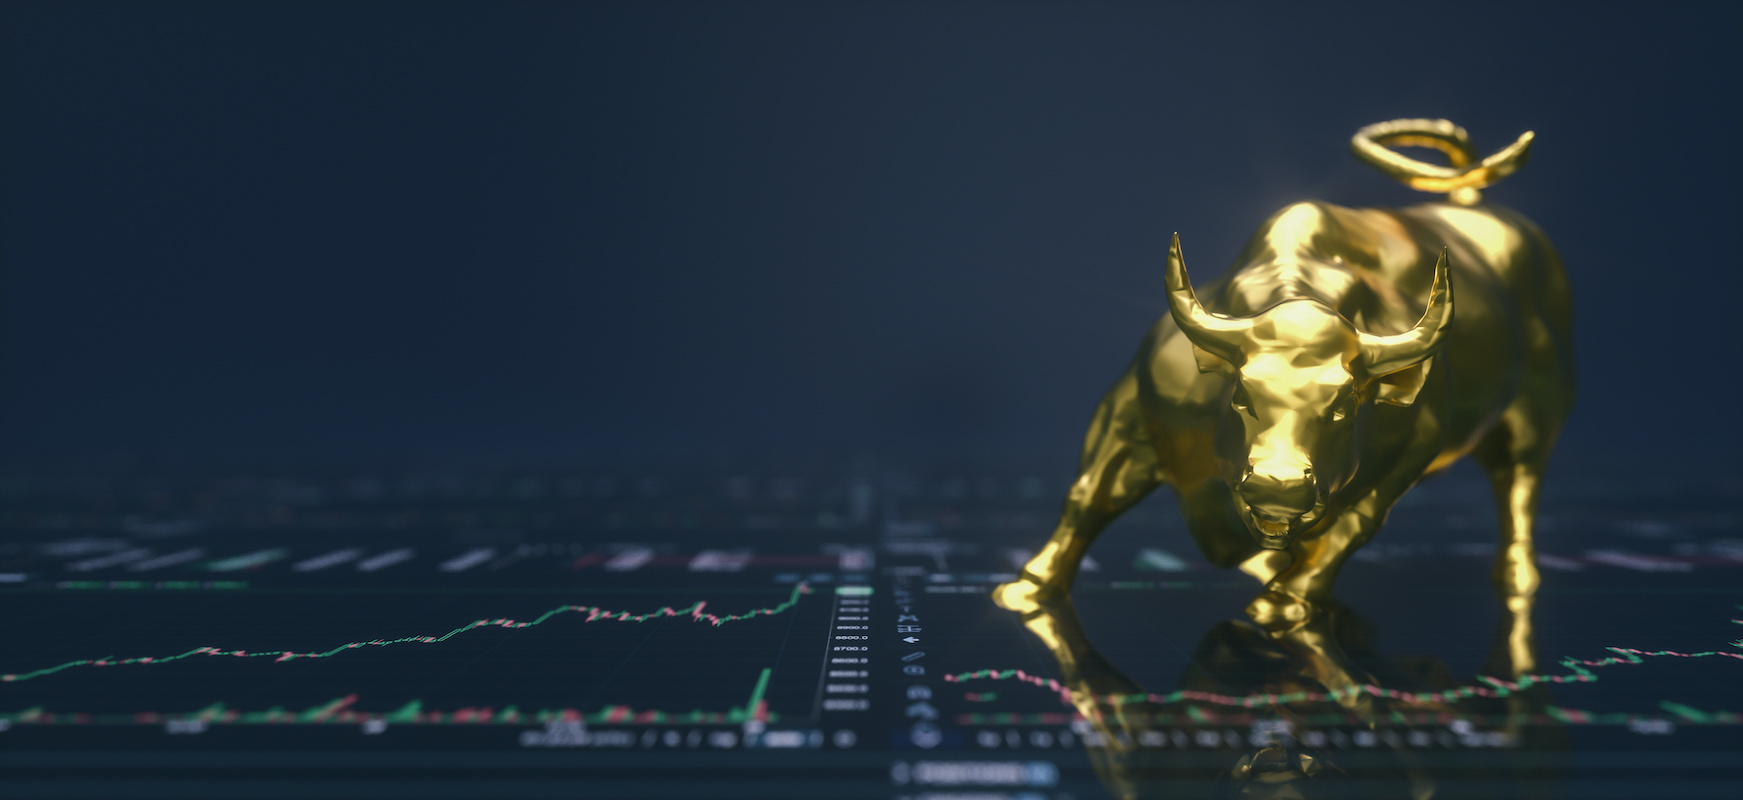 bull market investing www.paxfinancialgroup.com